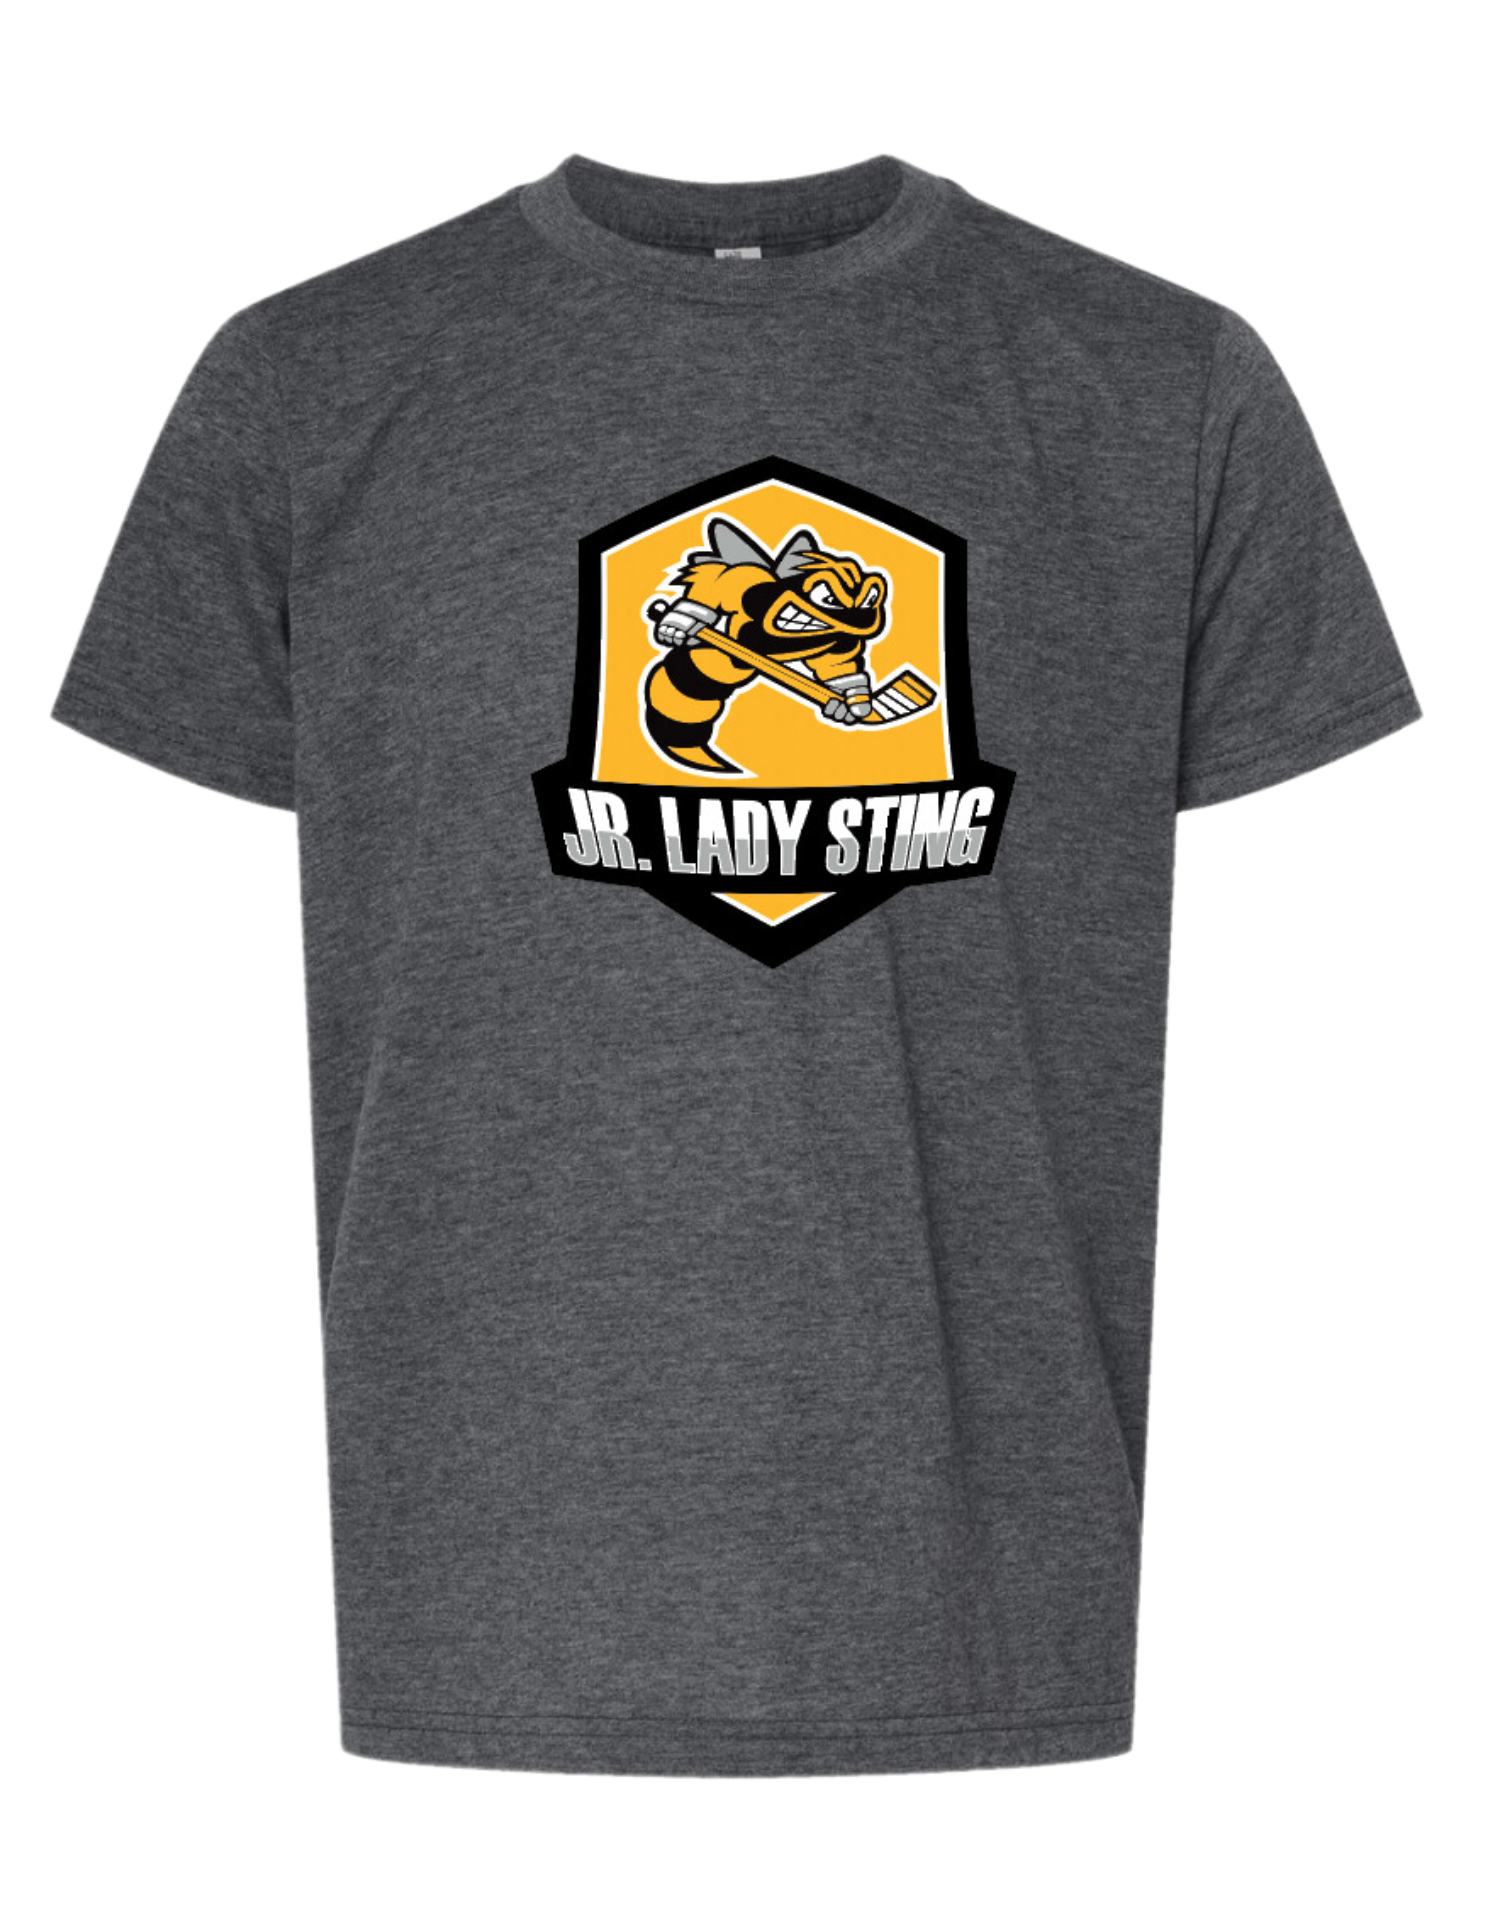 Jr Lady Sting T-Shirt- Adult